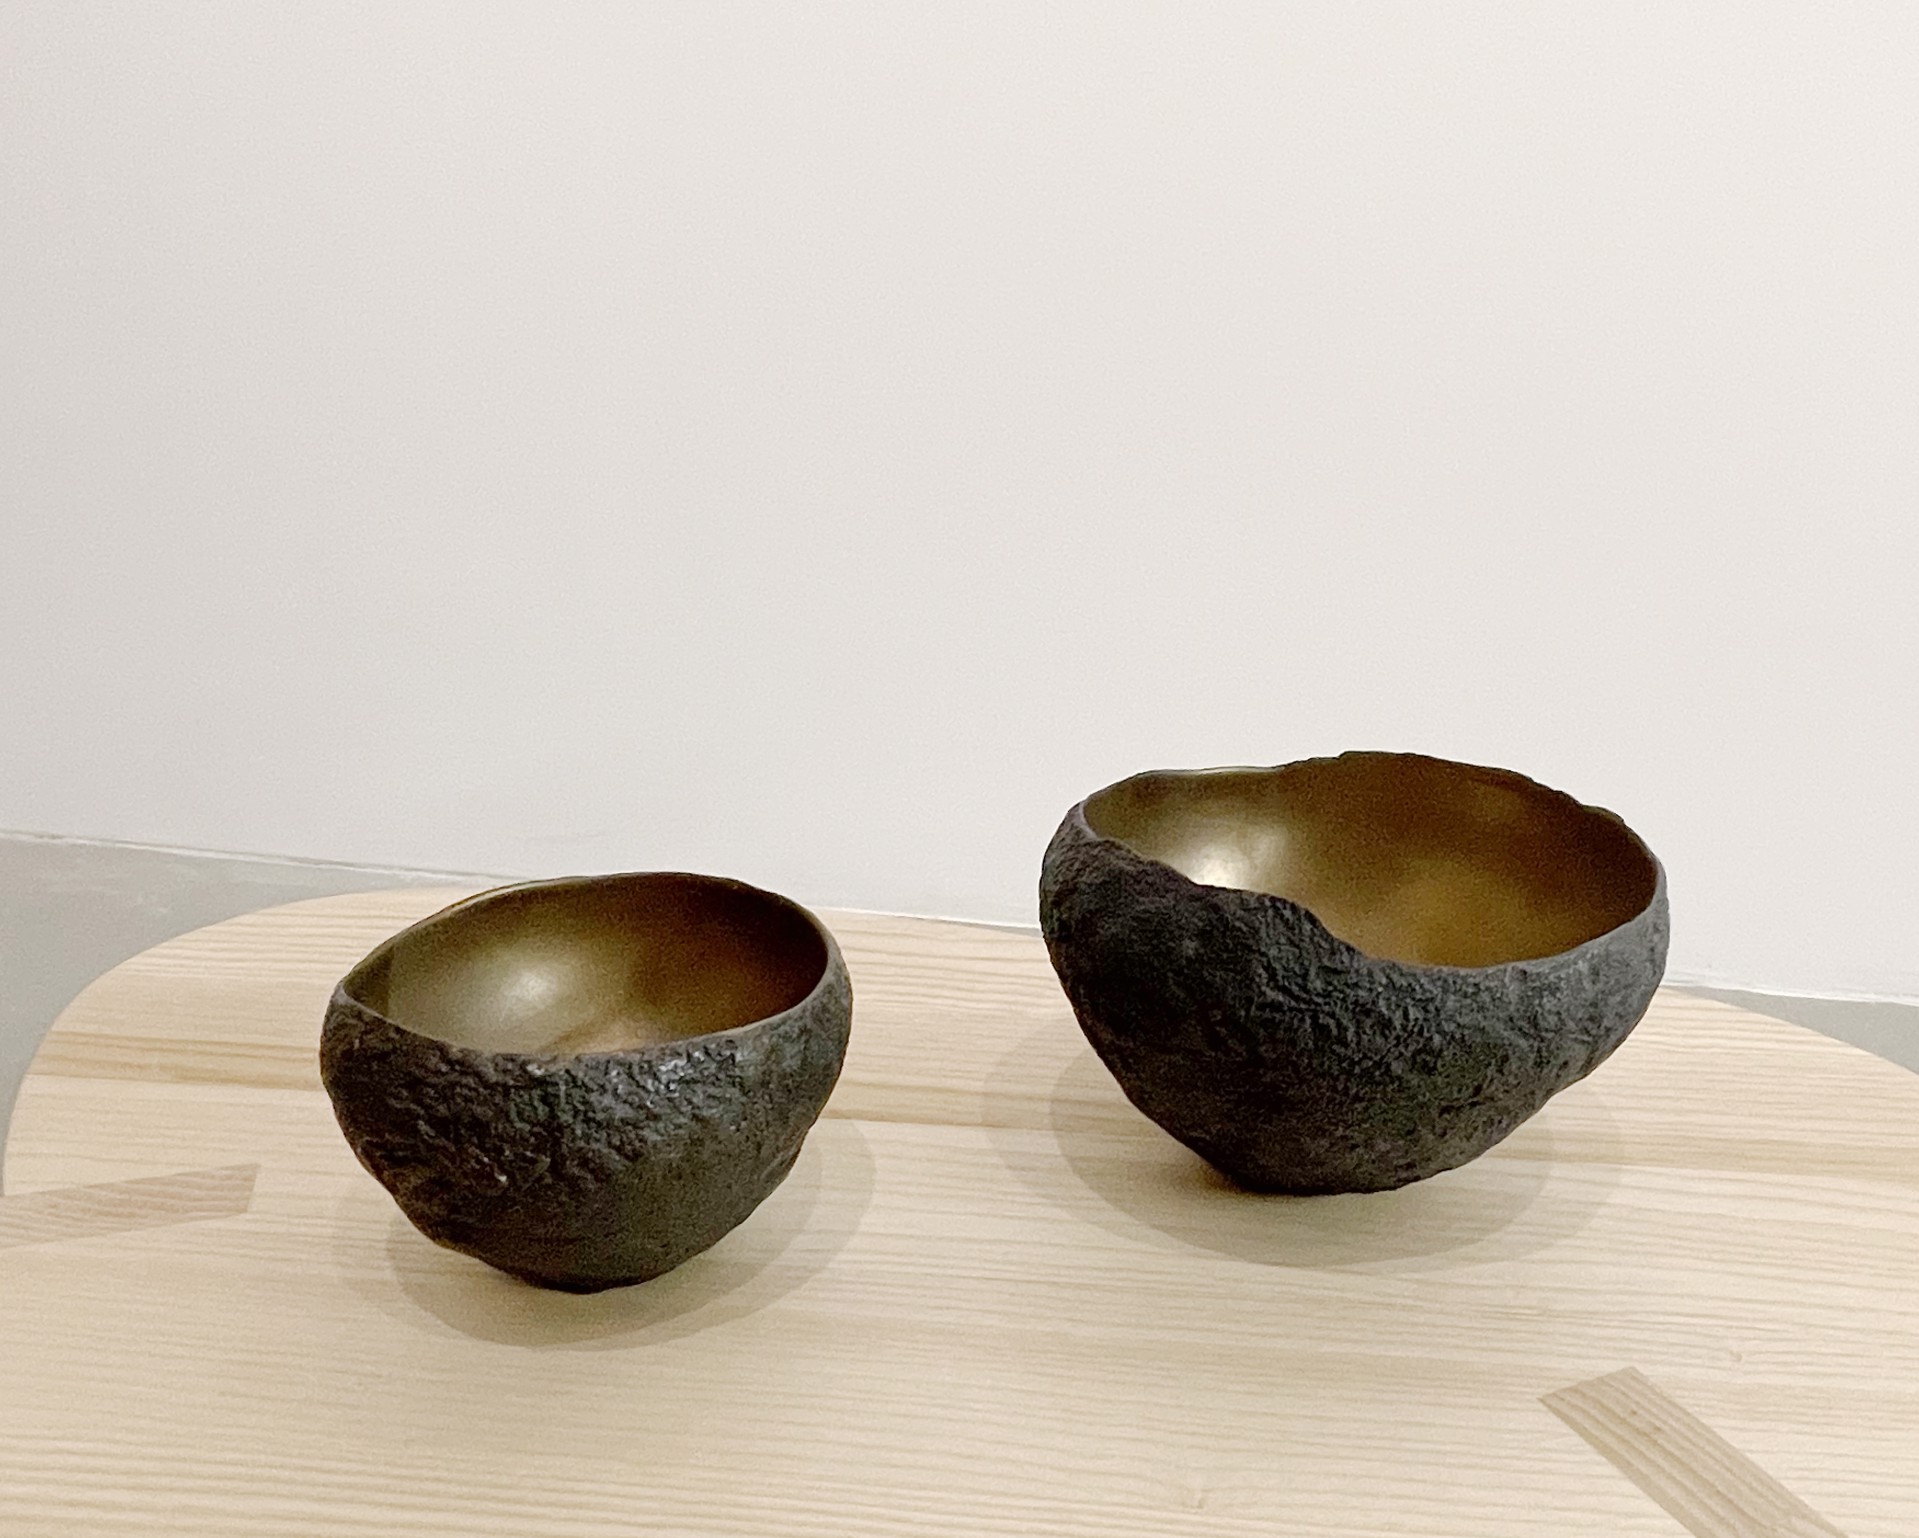 2 ceramic bowls with bronze glaze by Cristina Salusti